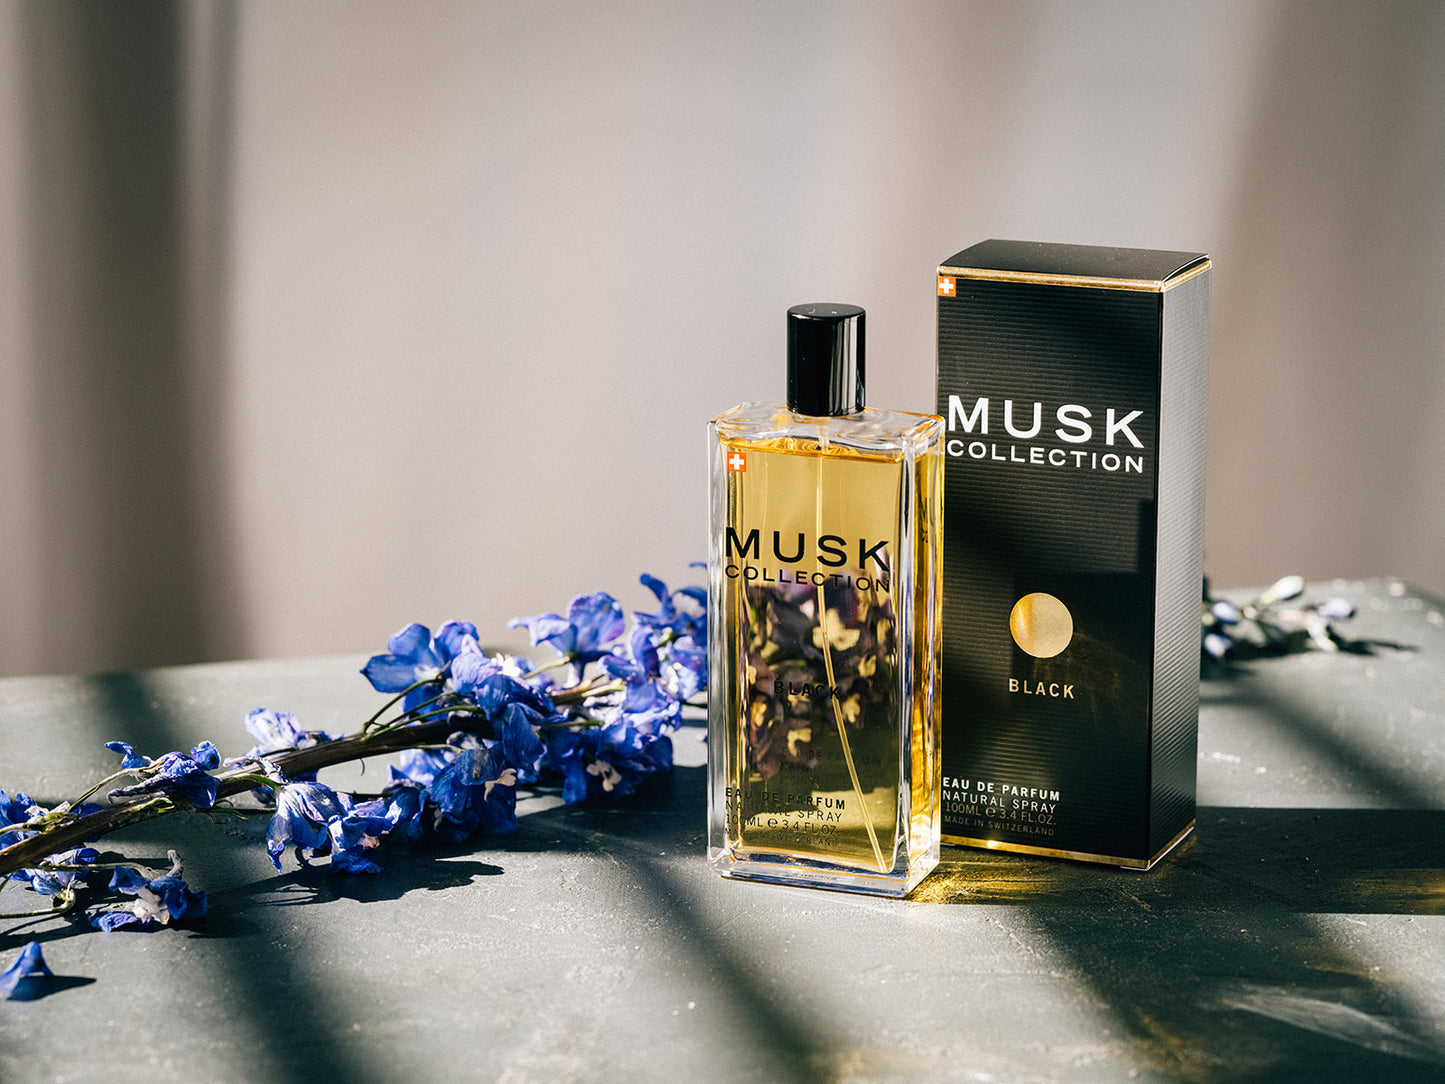 Black Musk Eau de Parfum 15ml - Den klassiska myskdoften